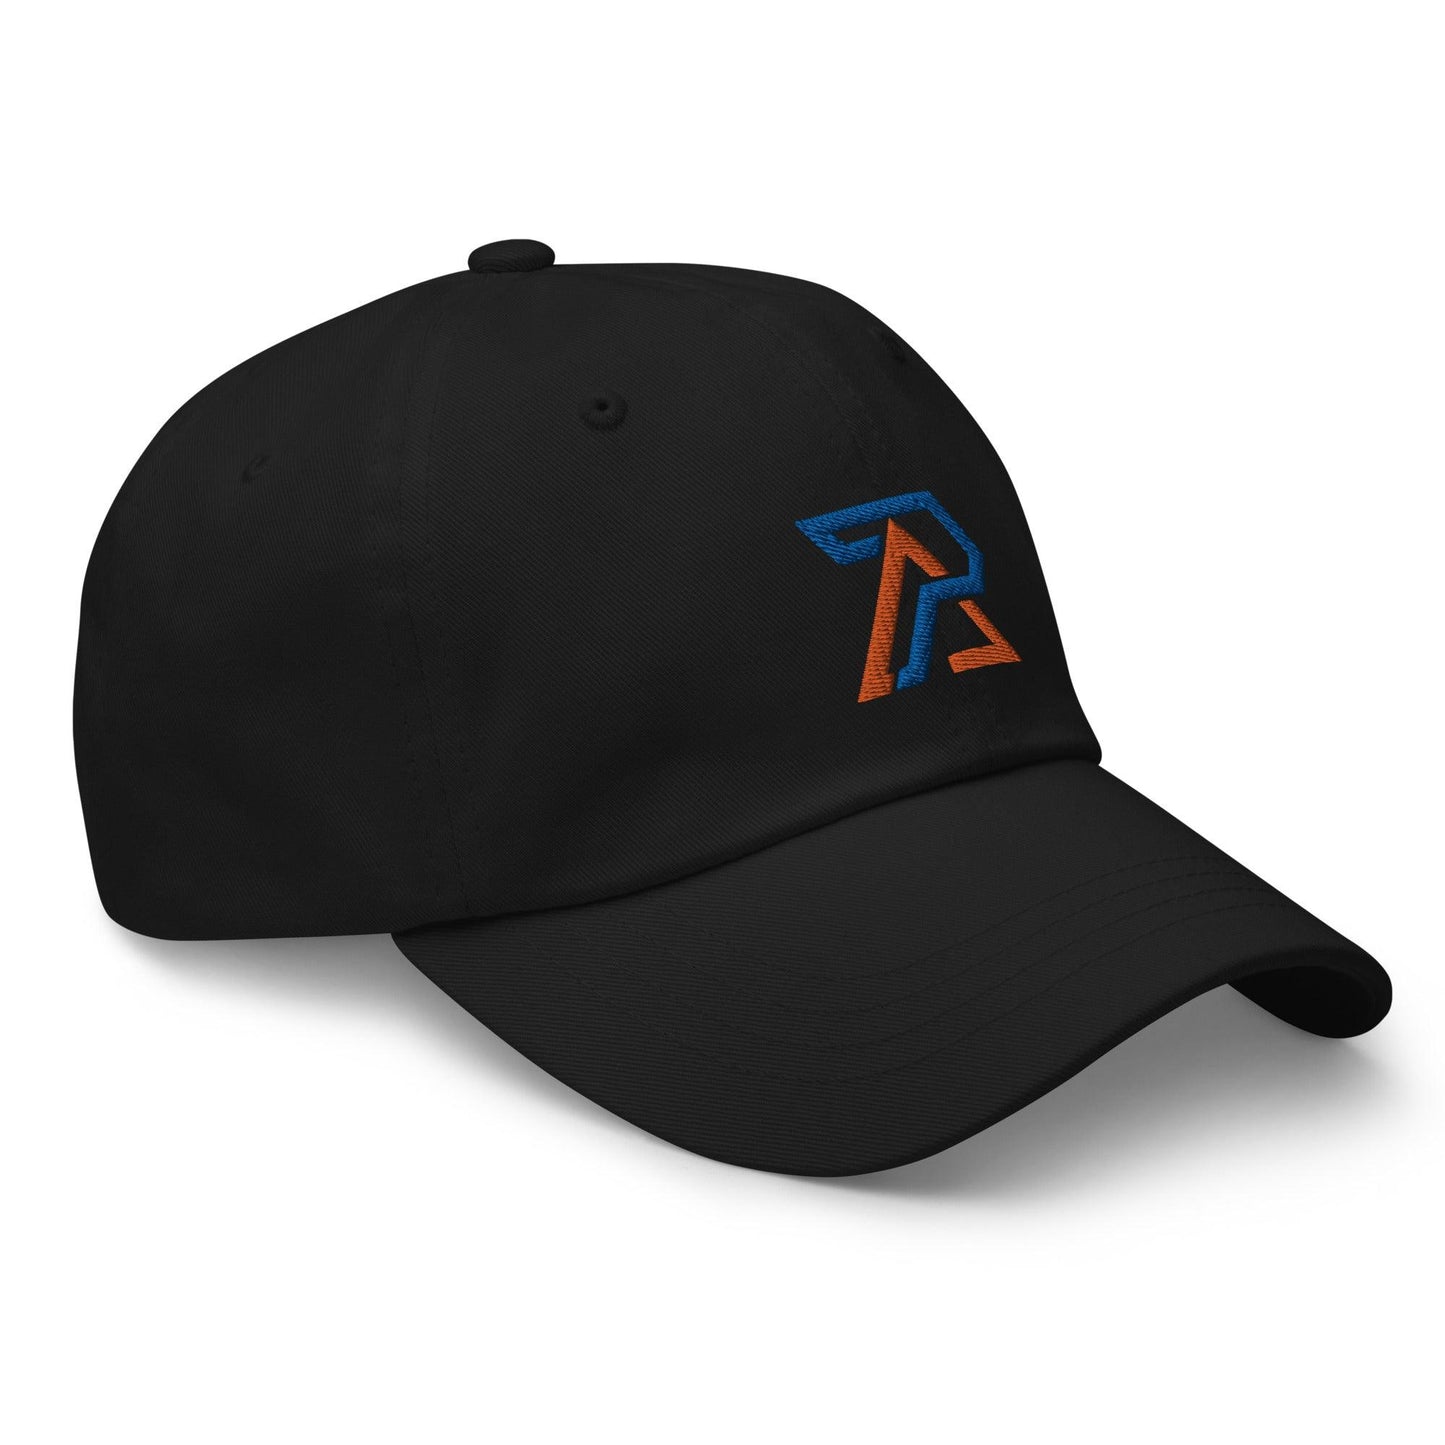 Philip Abner “Signature” hat - Fan Arch